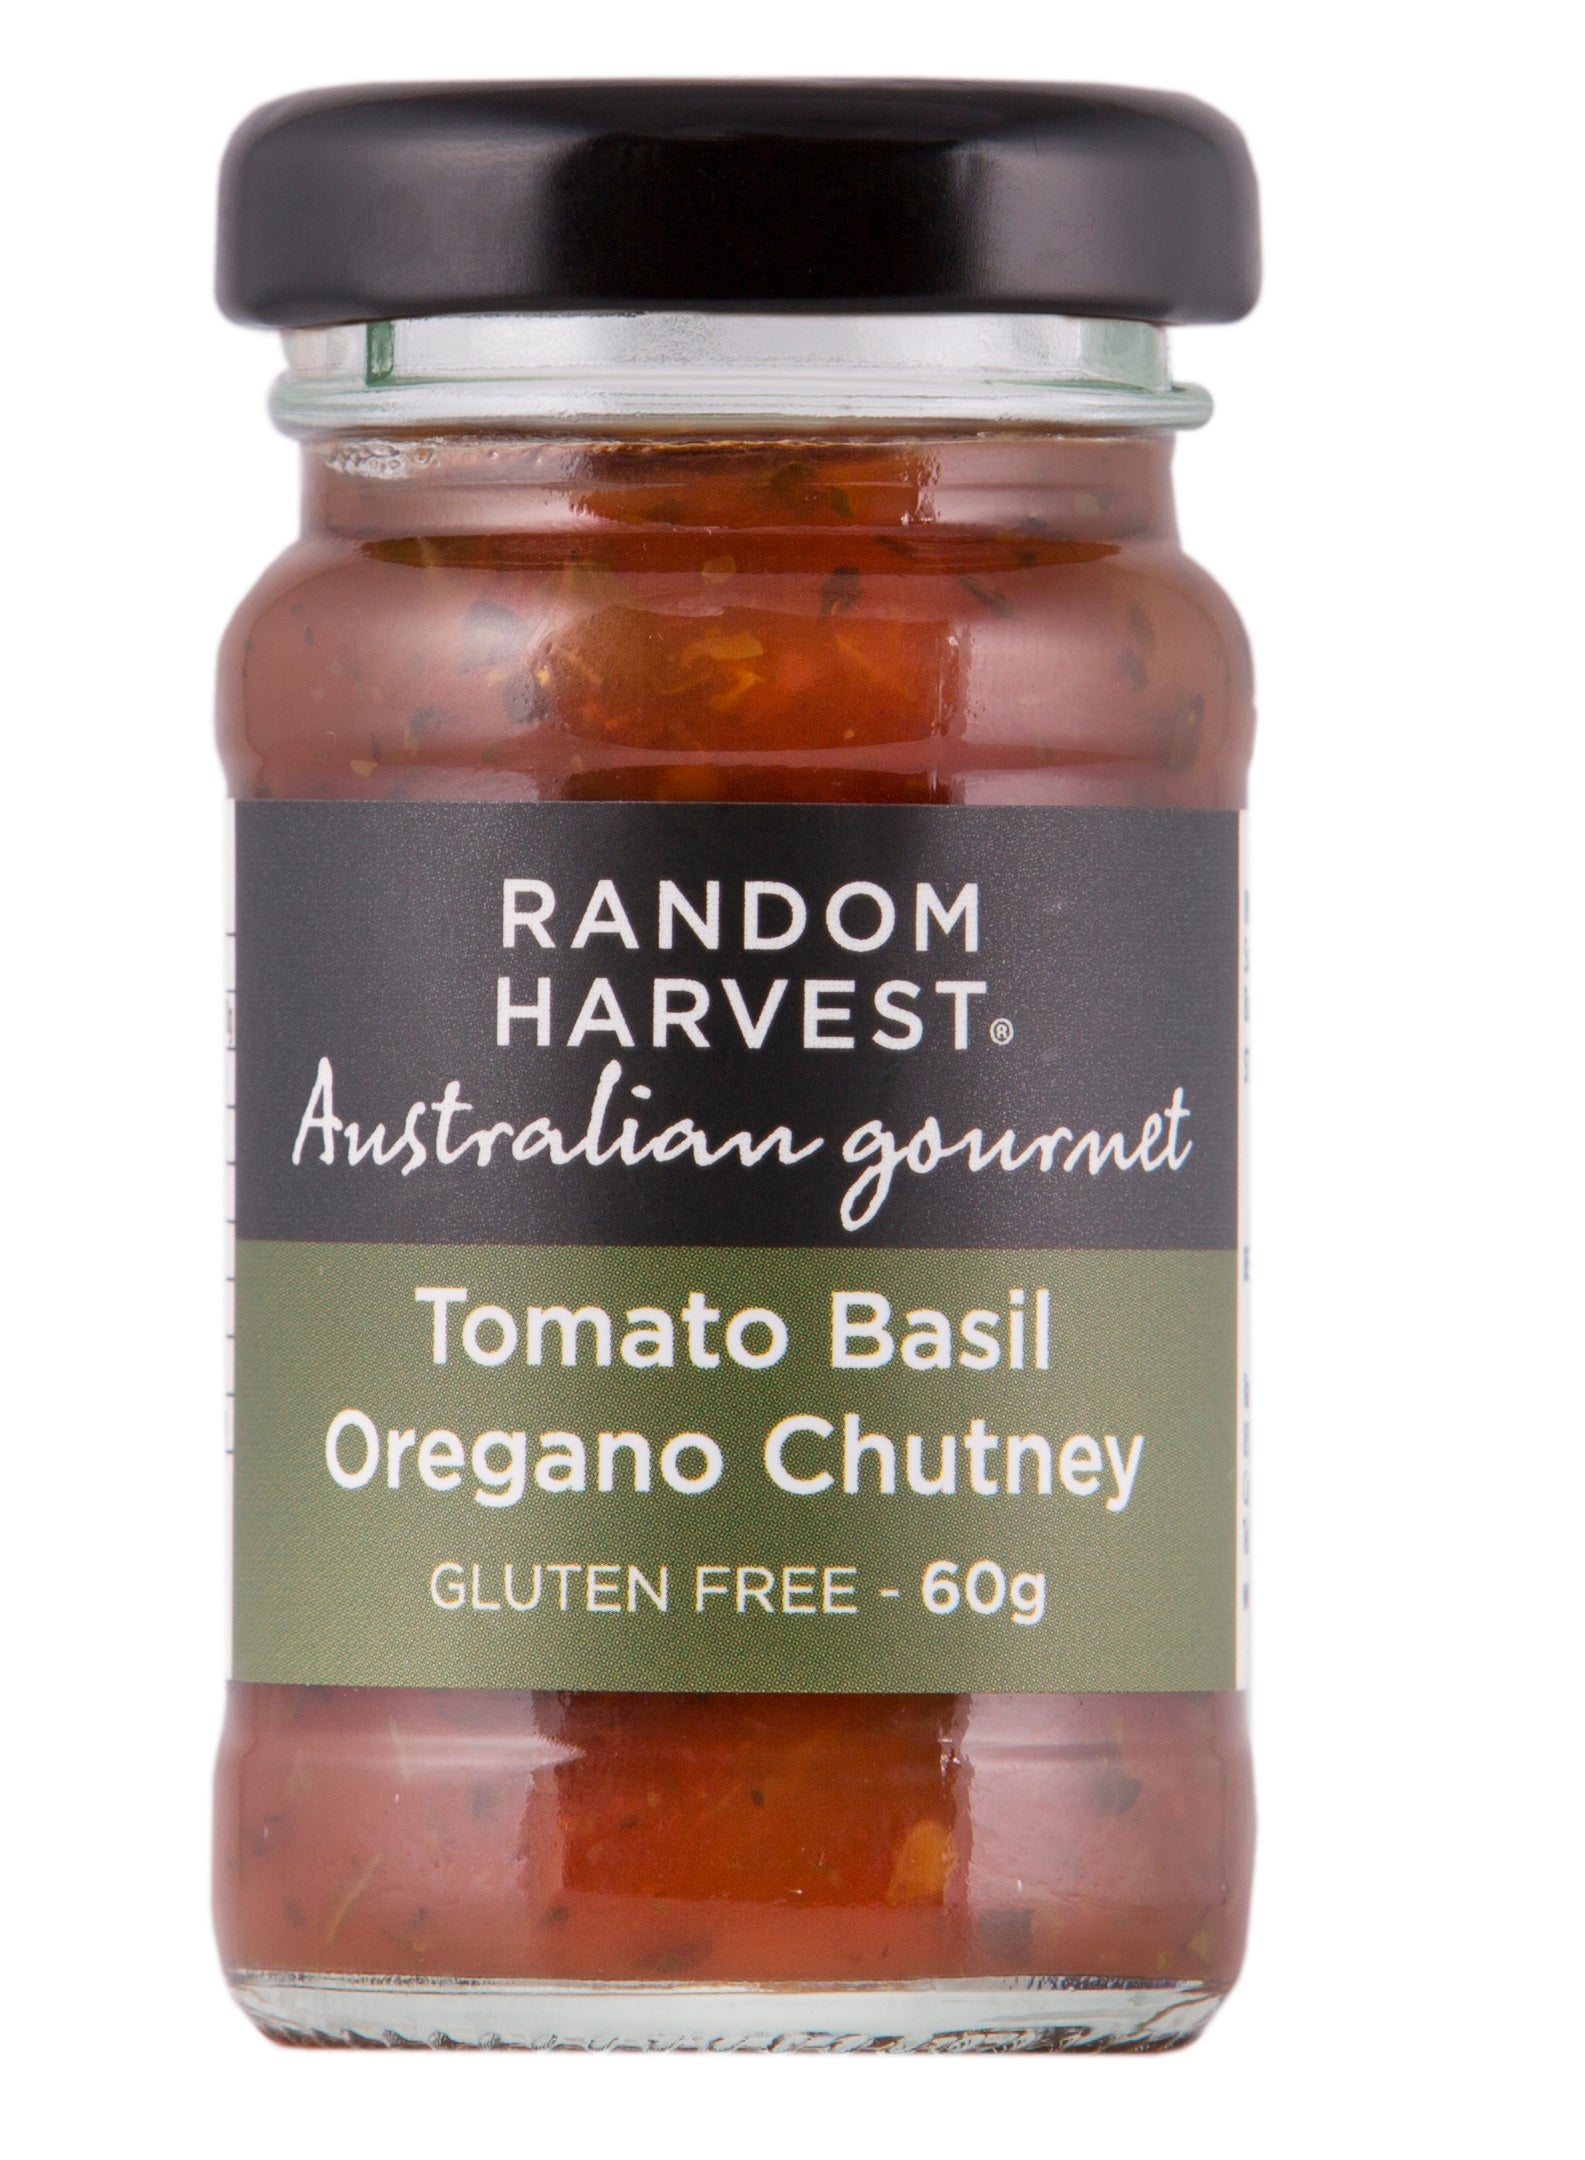 Tomato Basil & Oregano Chutney